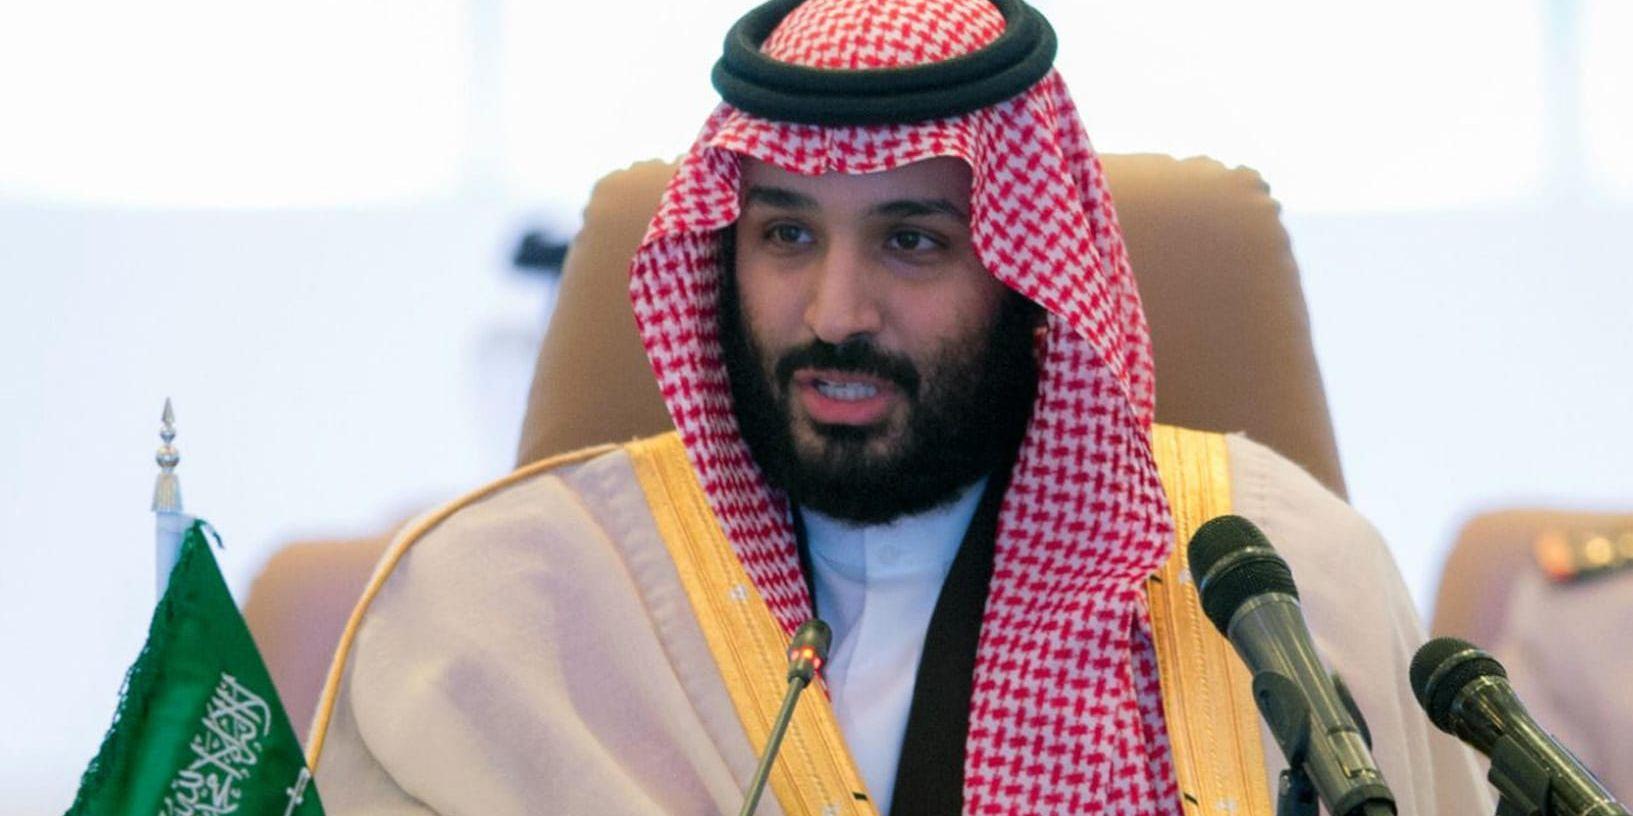 Saudiarabiens kronprins Mohammed bin Salman. Arkivbild.